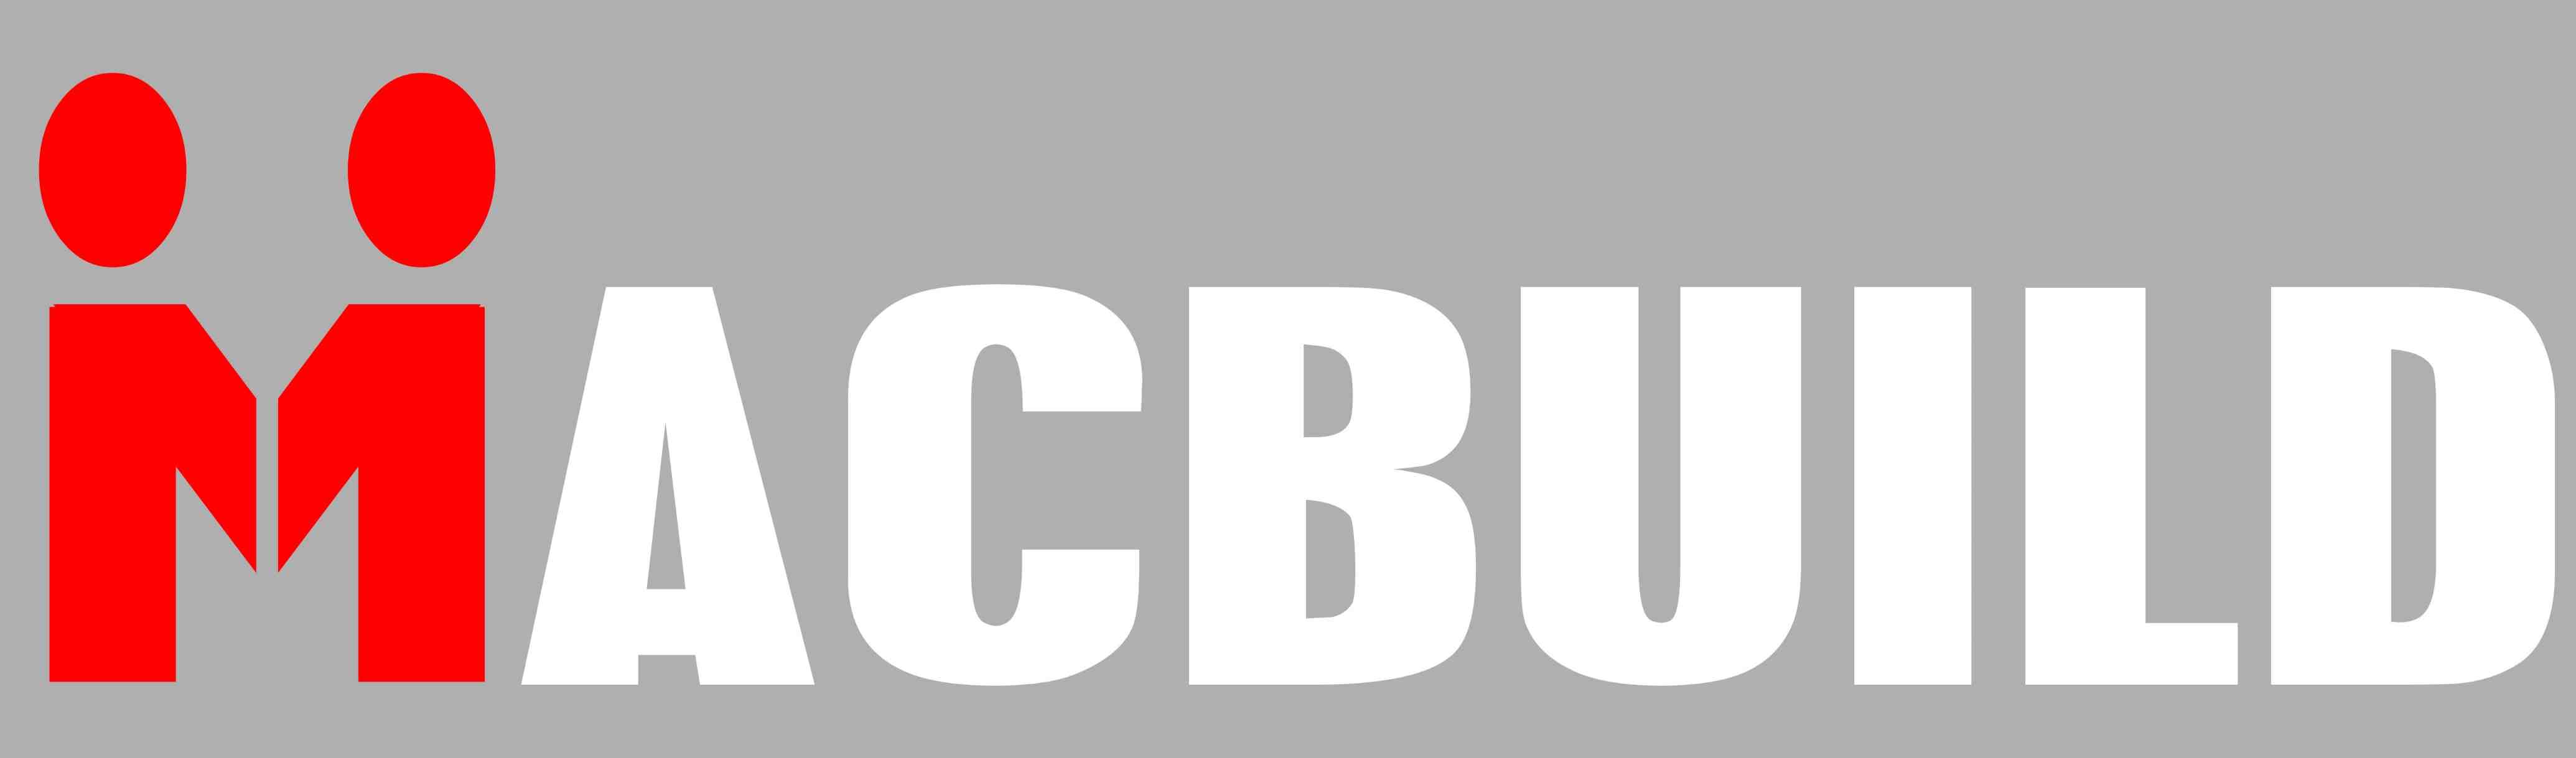 Company logo for Macbuild Construction Pte. Ltd.